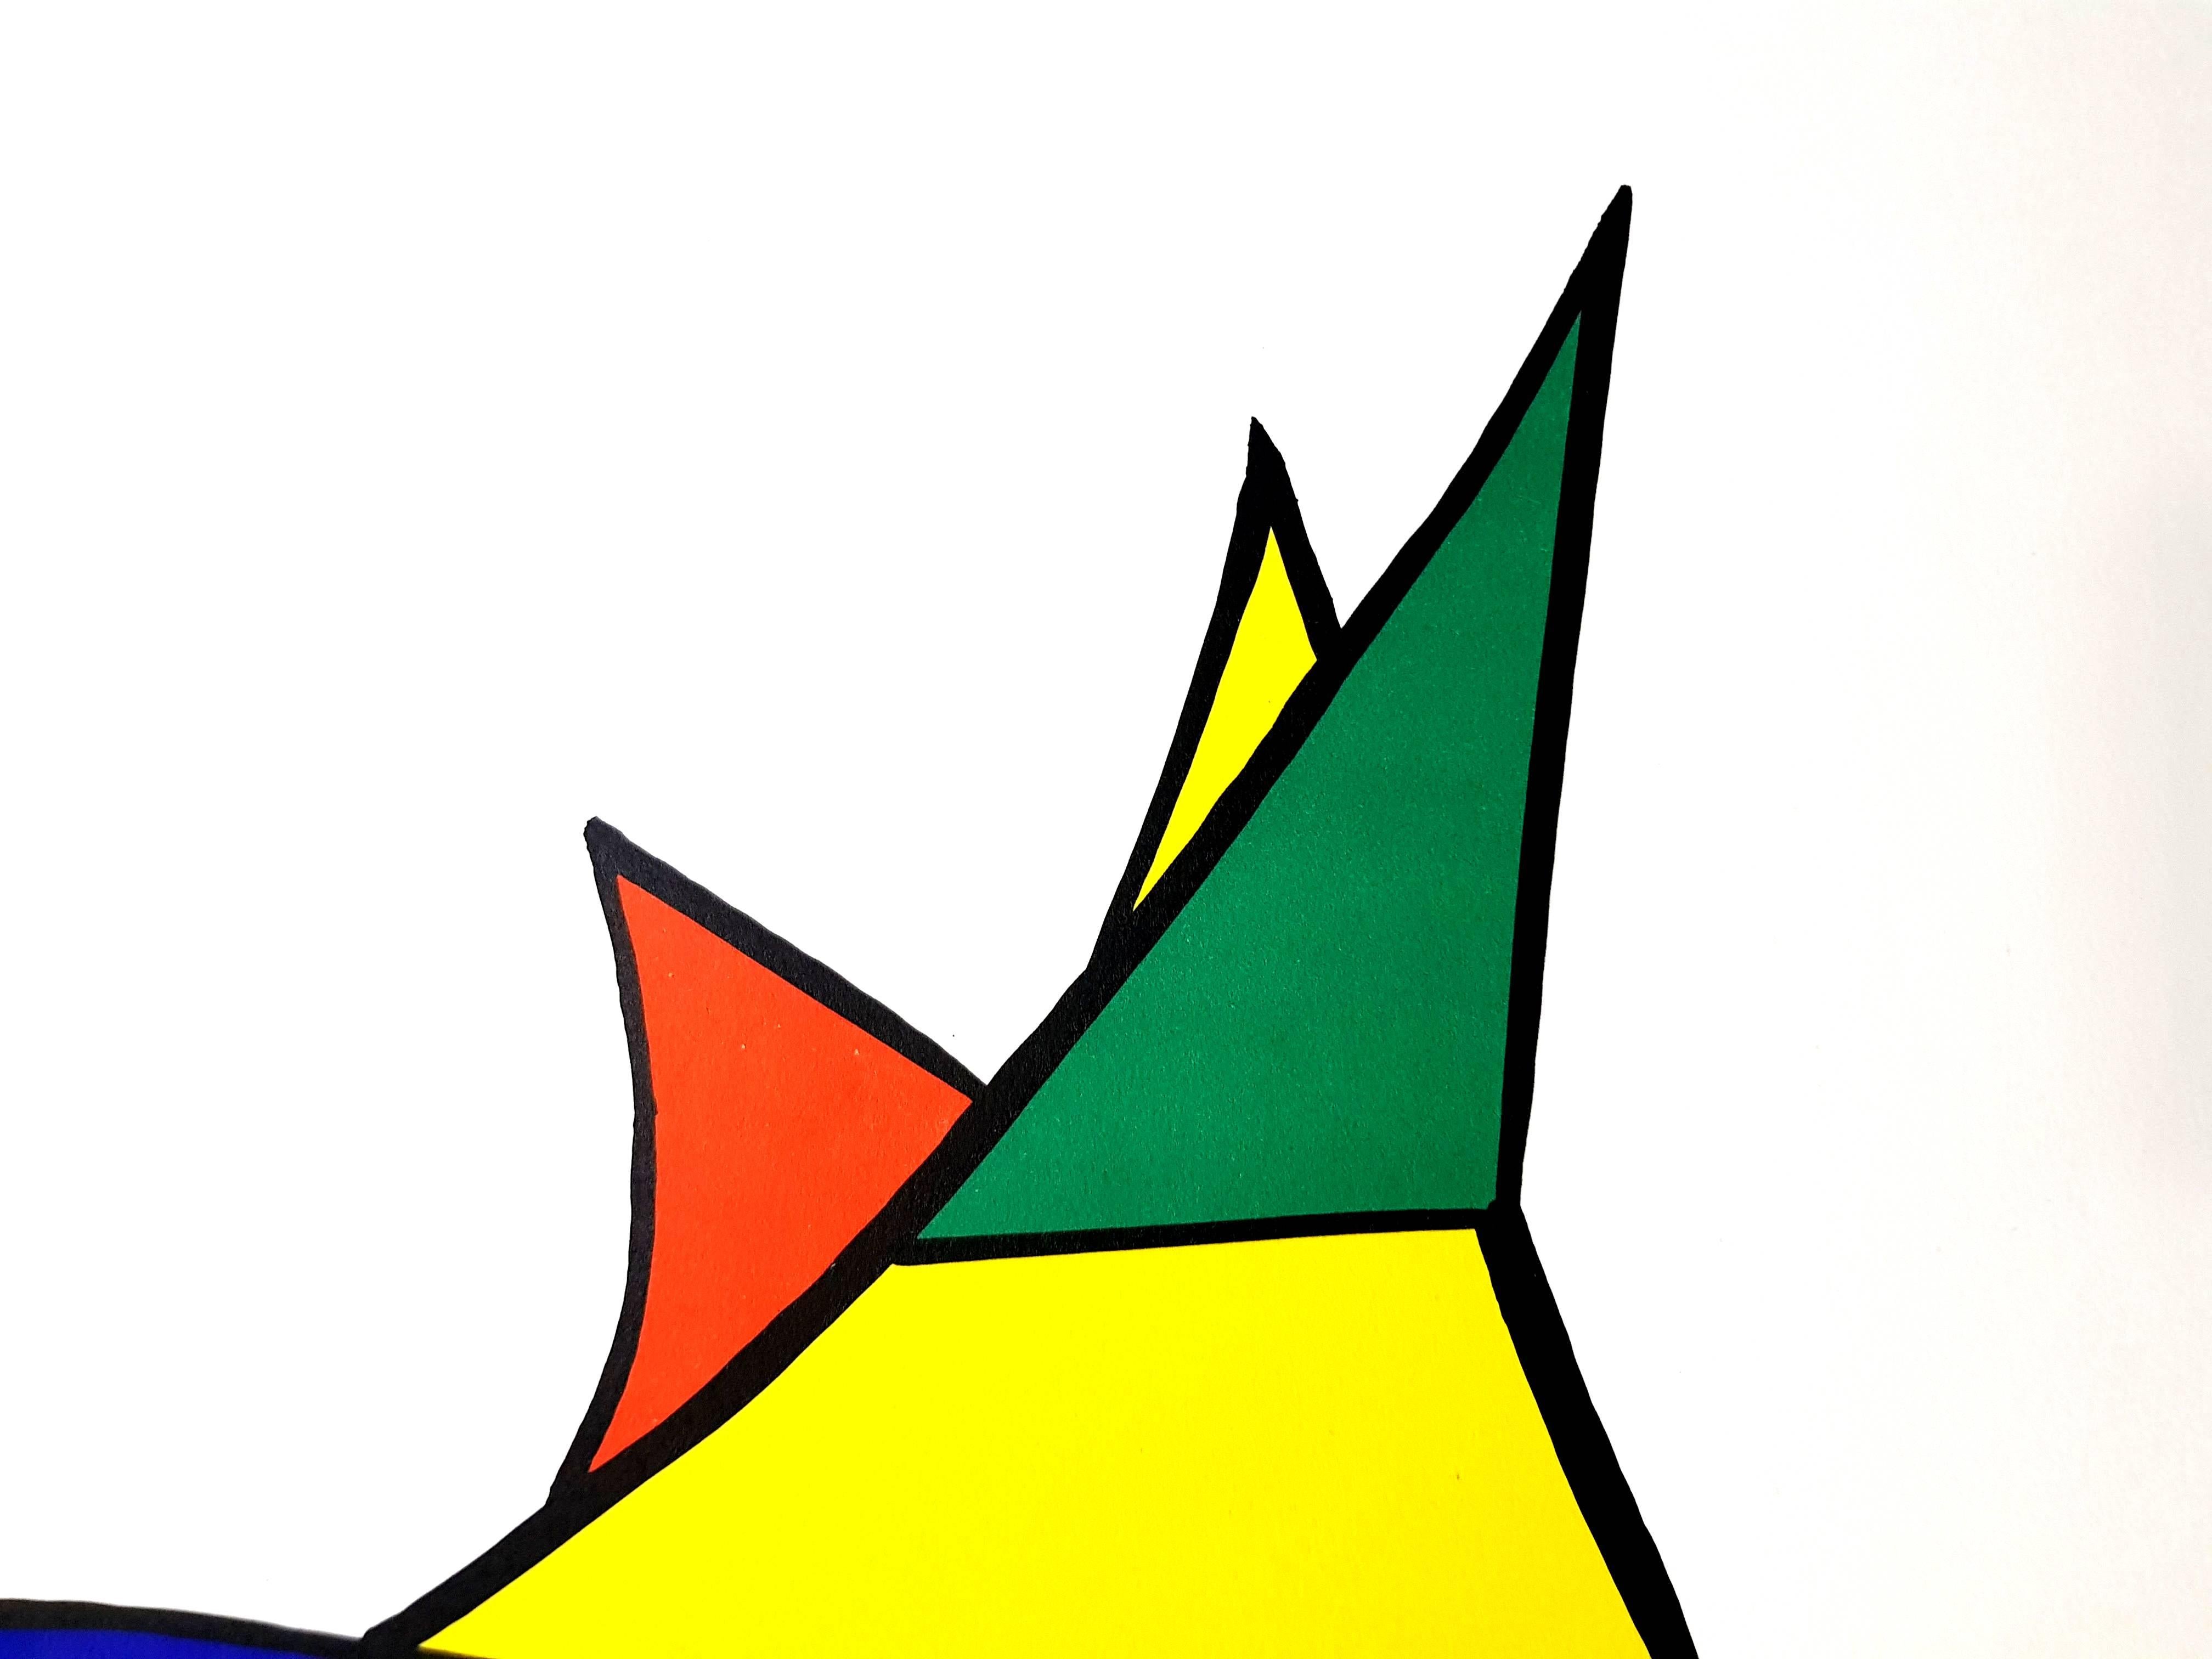 Alexander Calder - Original Lithograph - Behind the Mirror For Sale 3